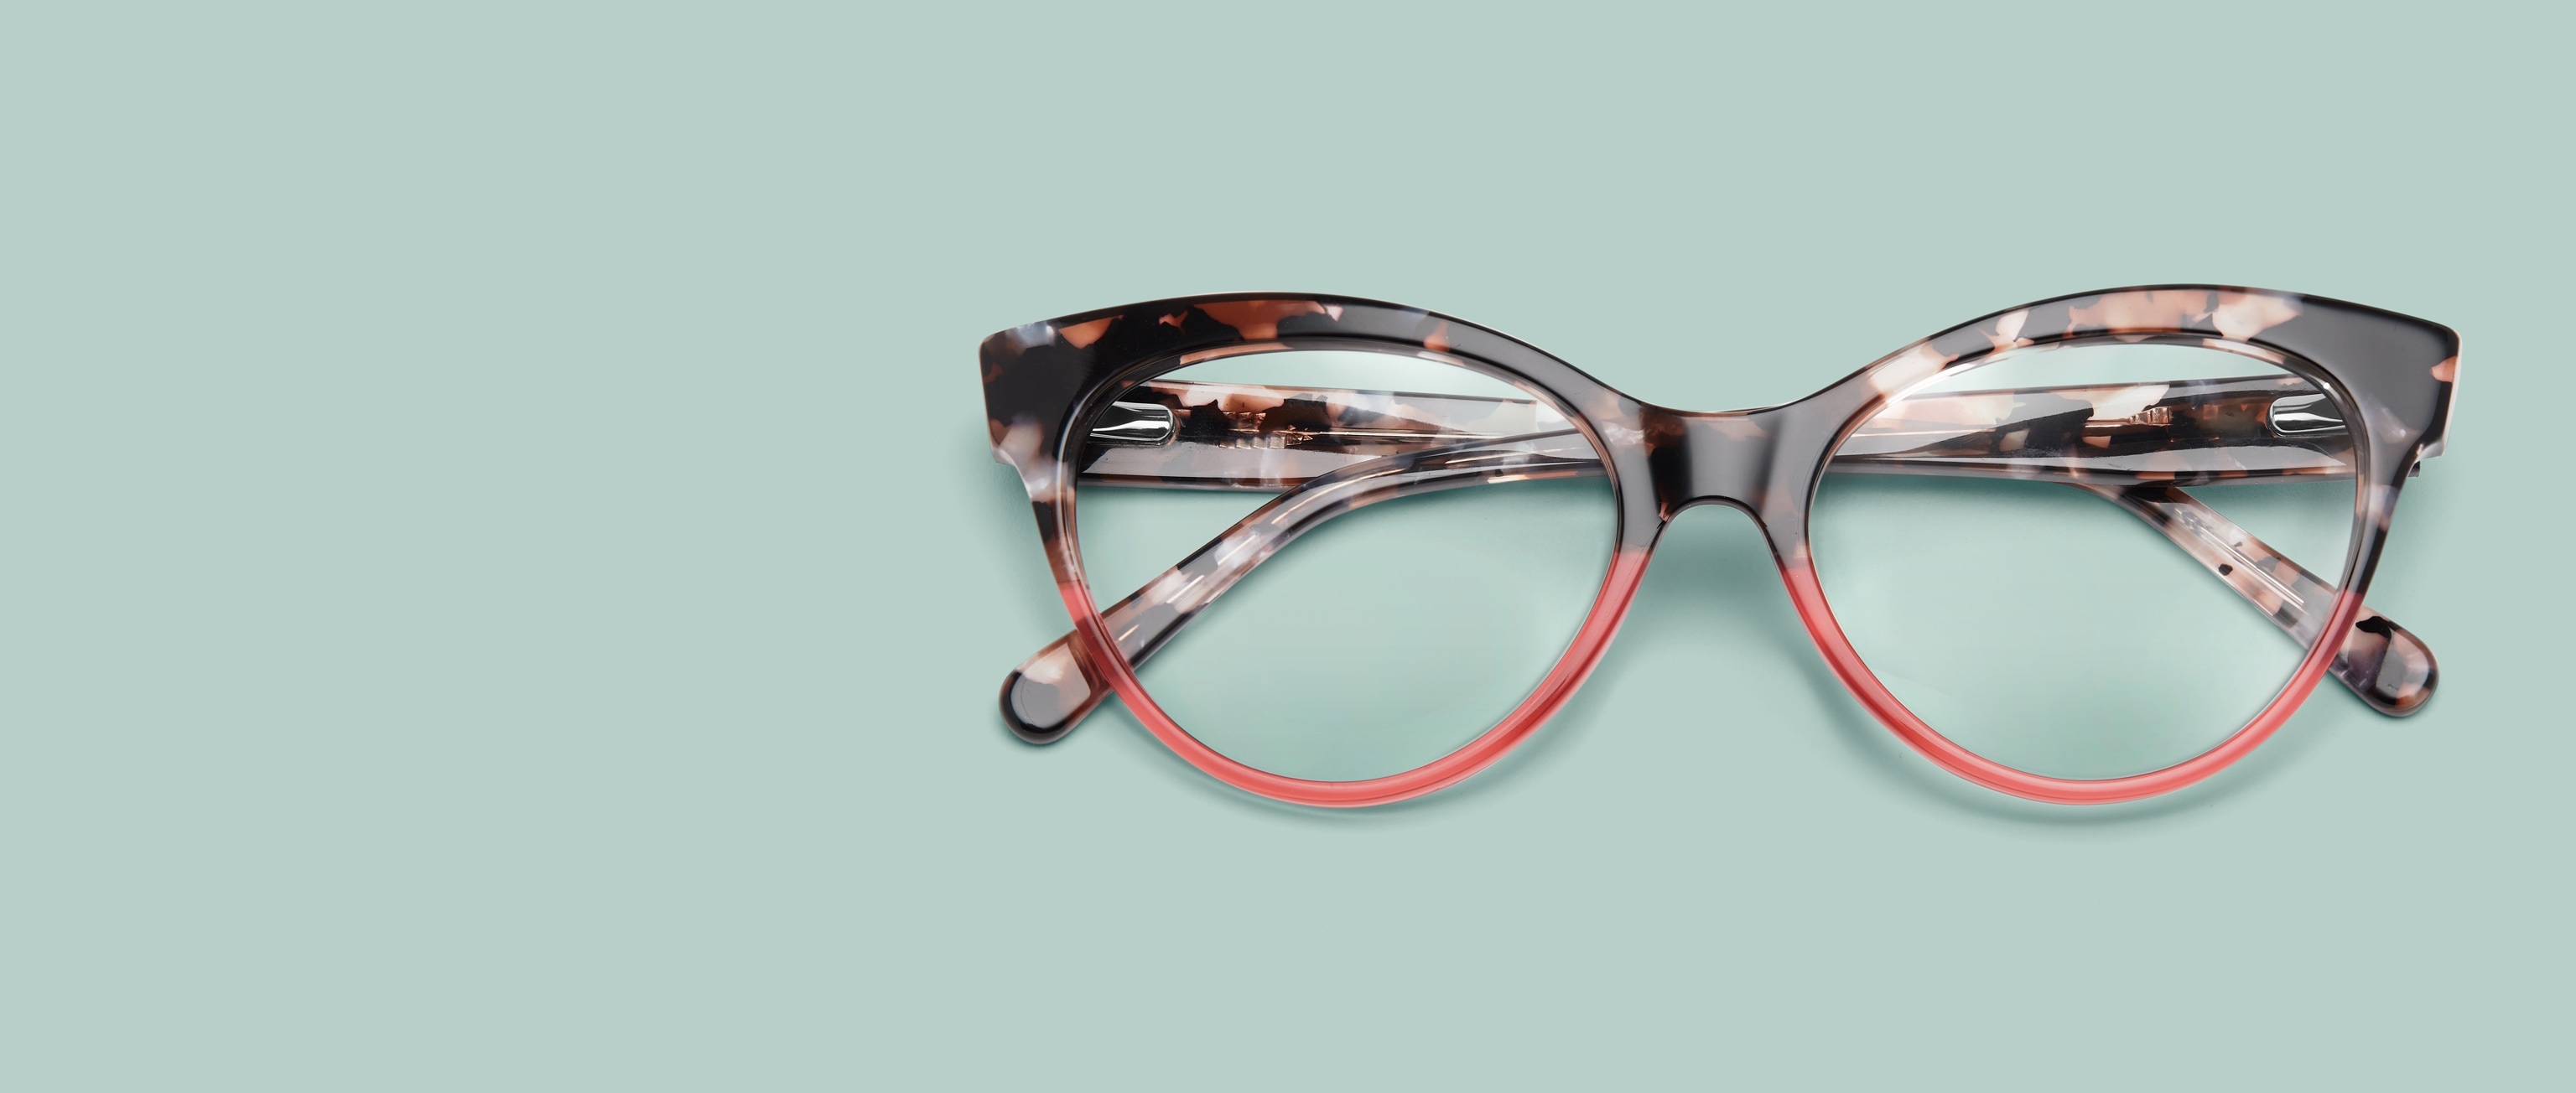 Cat Eye Frames Glasses Discount Collection Save 68 Jlcatjgobmx 